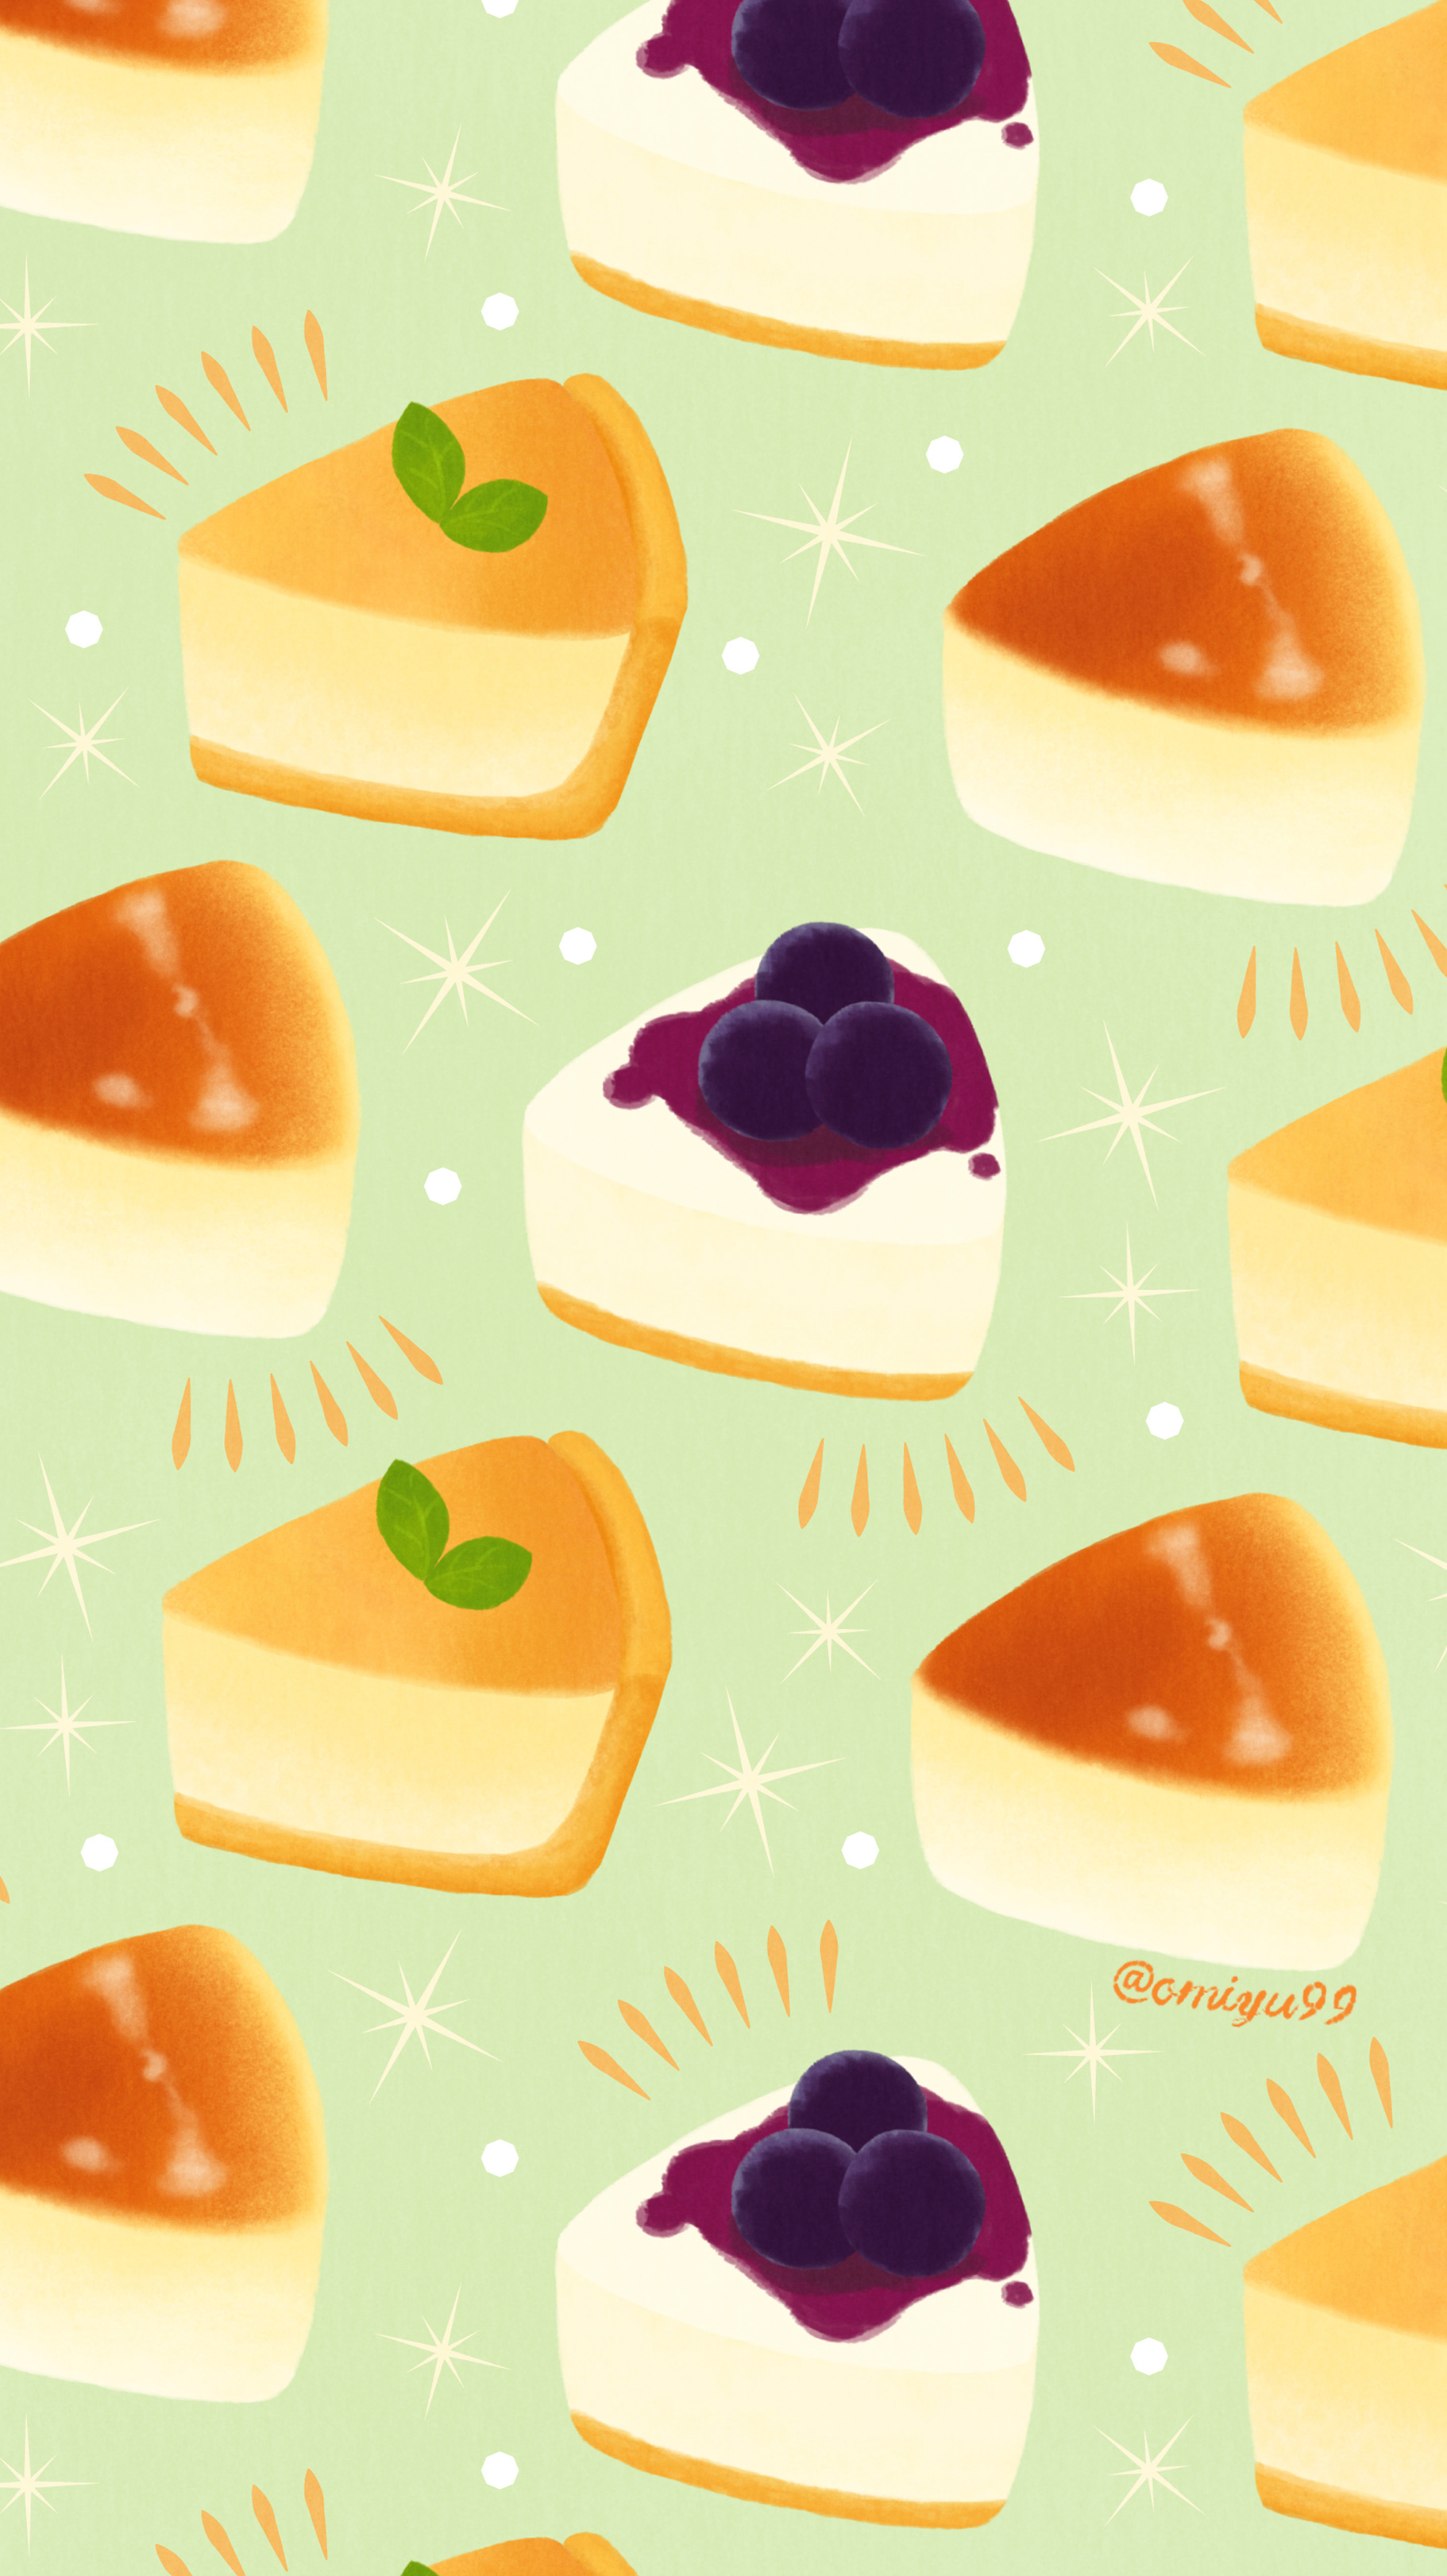 Omiyu Twitter પર チーズケーキな壁紙 Illust Illustration 壁紙 イラスト Iphone壁紙 ケーキ 食べ物 Cheesecake T Co 2ut3sdywhv Twitter